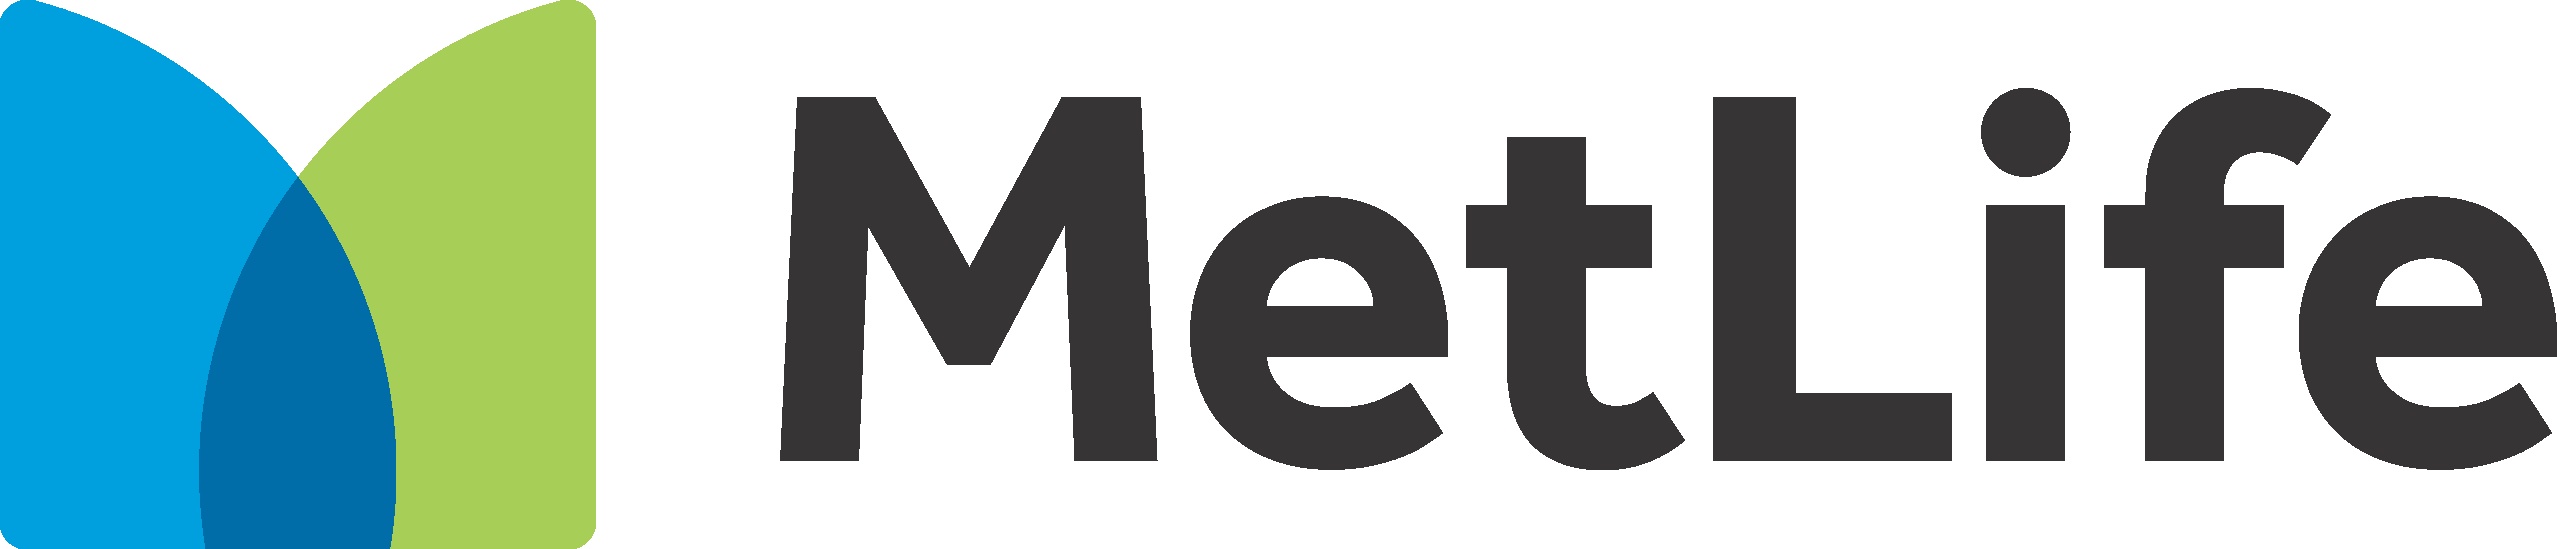 MetLife Auto Insurance